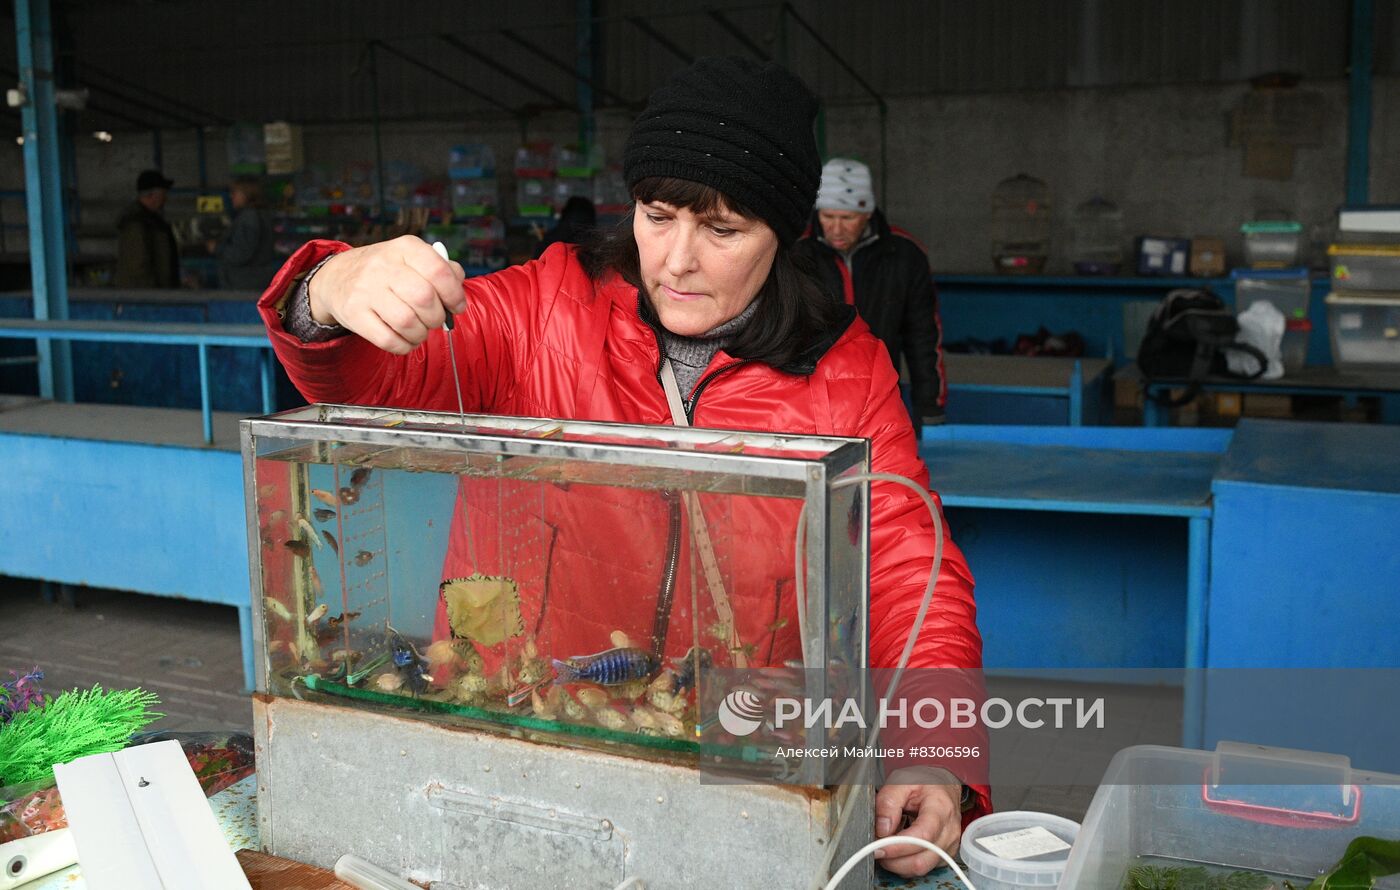 Центральный рынок в Донецке